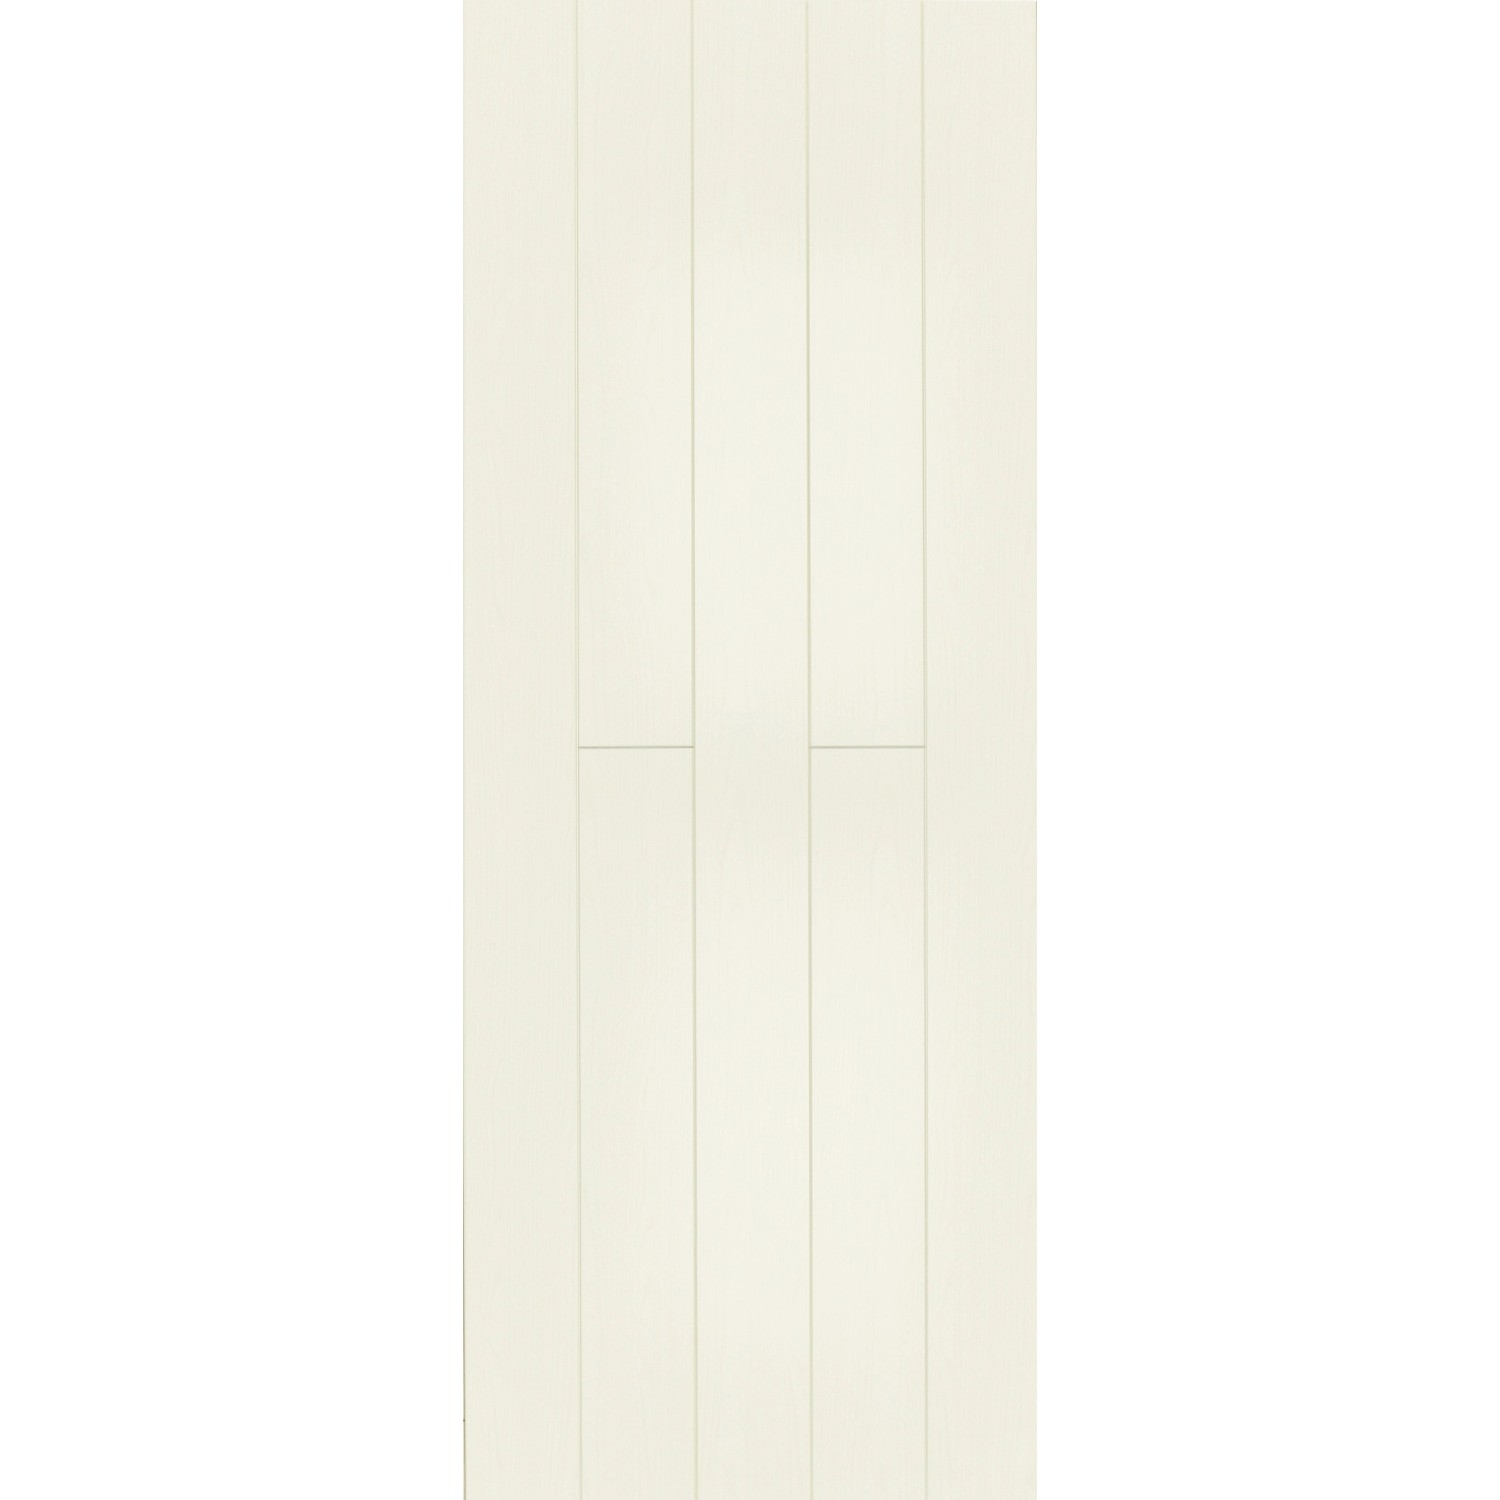 Parador Dekorpaneel Novara 257 cm x 20 cm Esche Weiß Glänzend von Parador